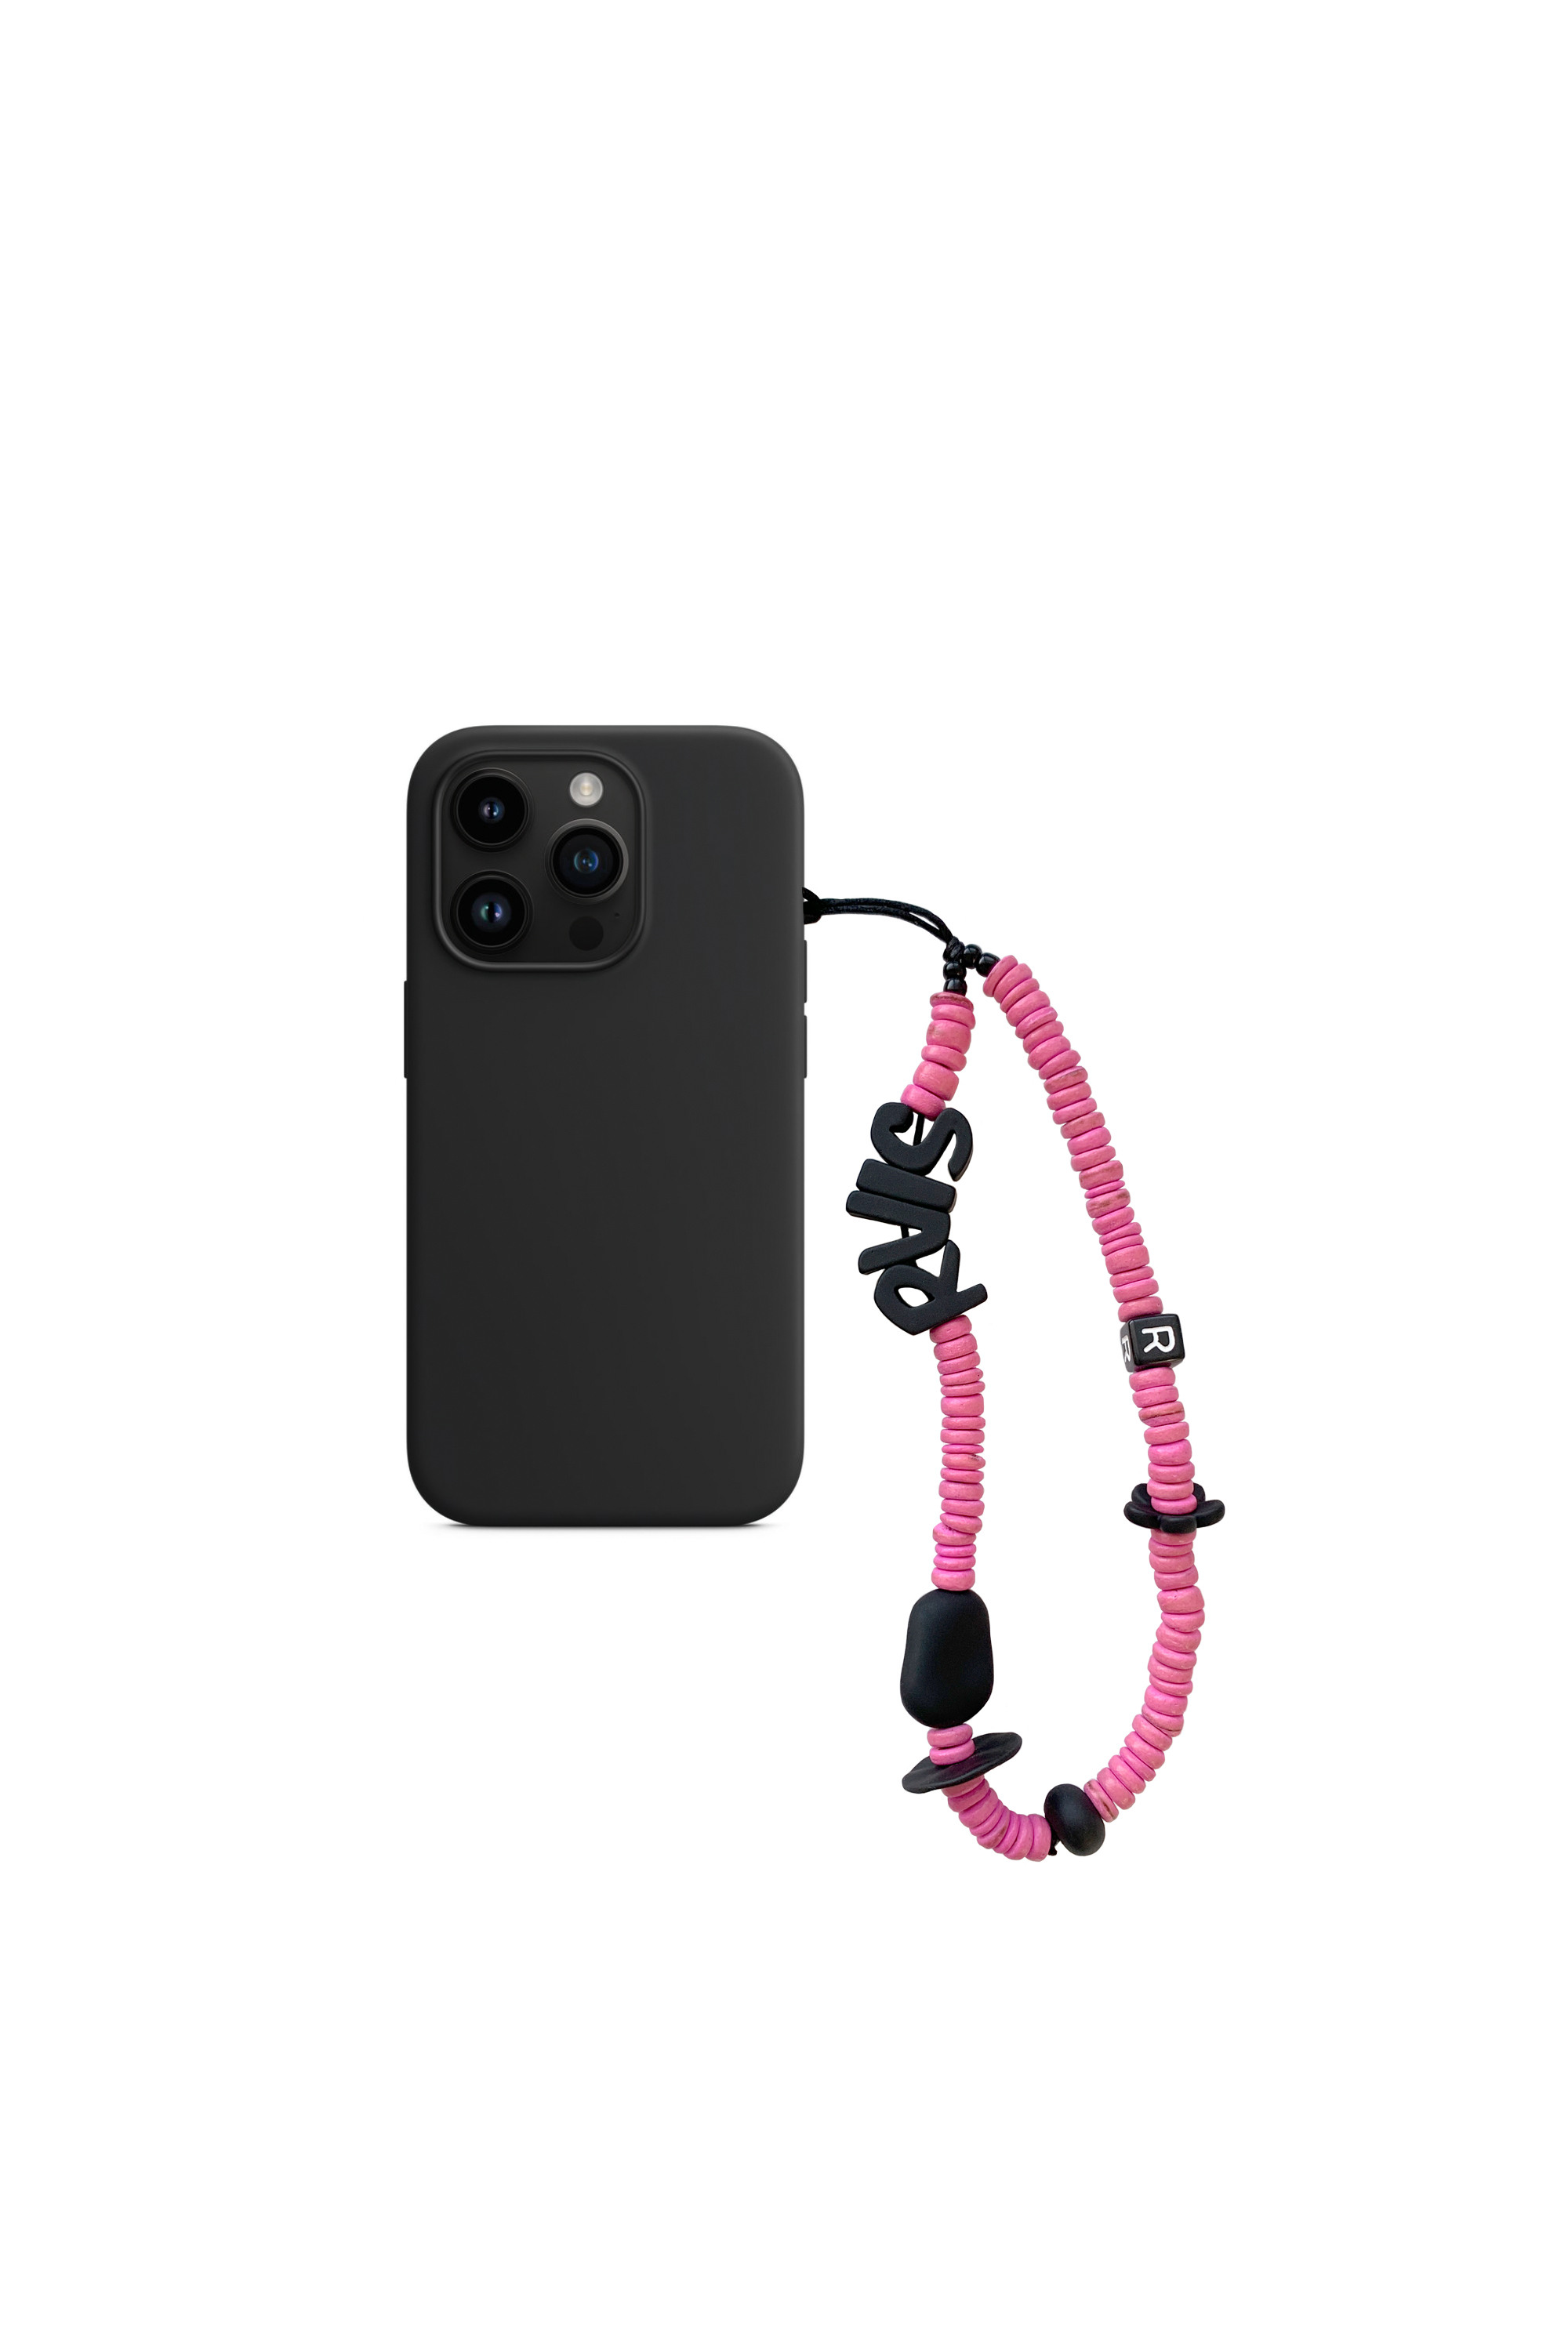 RVIS-phone-strap-pink-1.jpg